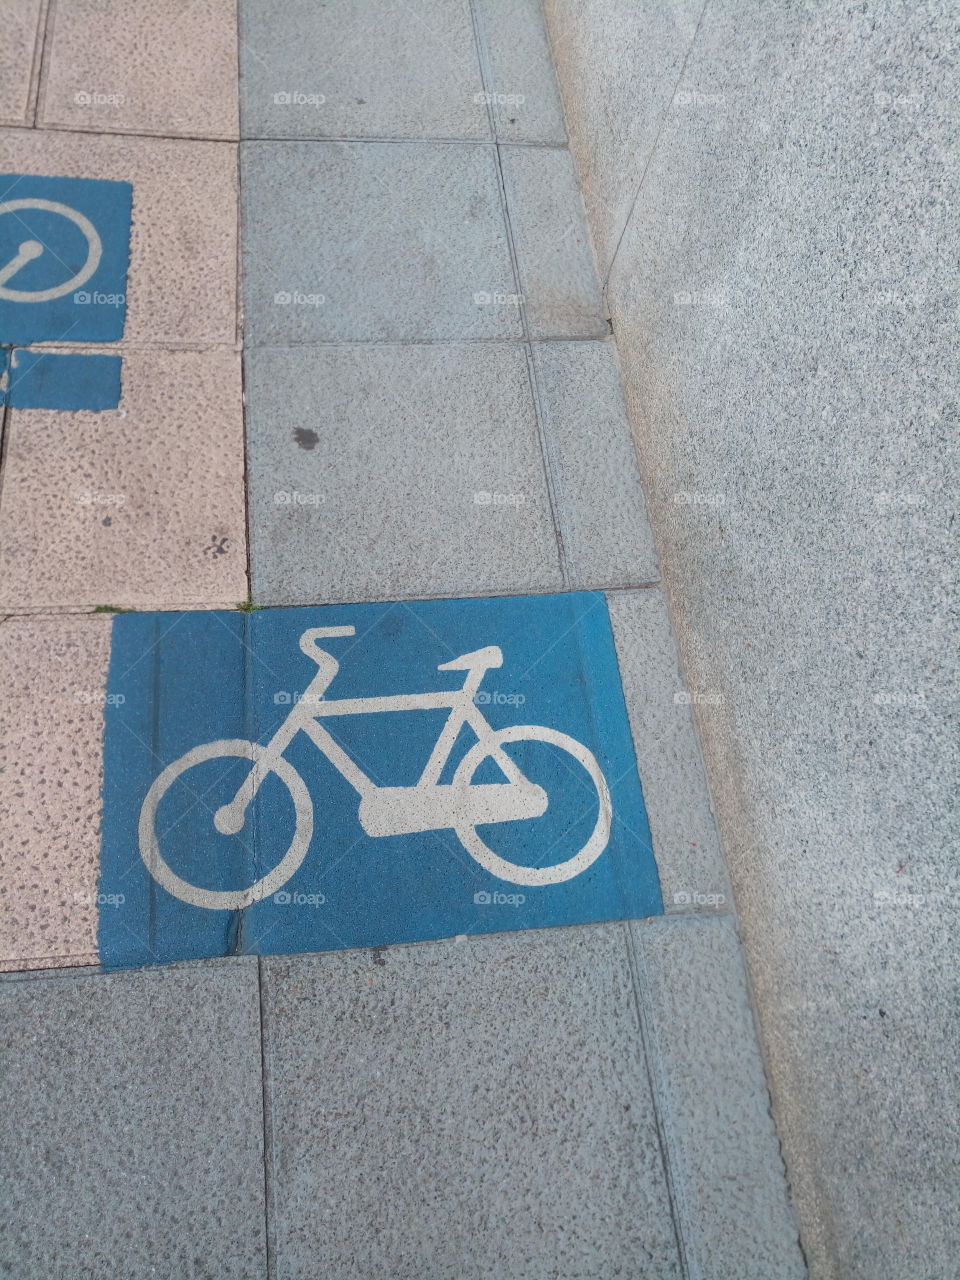 bicycle lane on the street